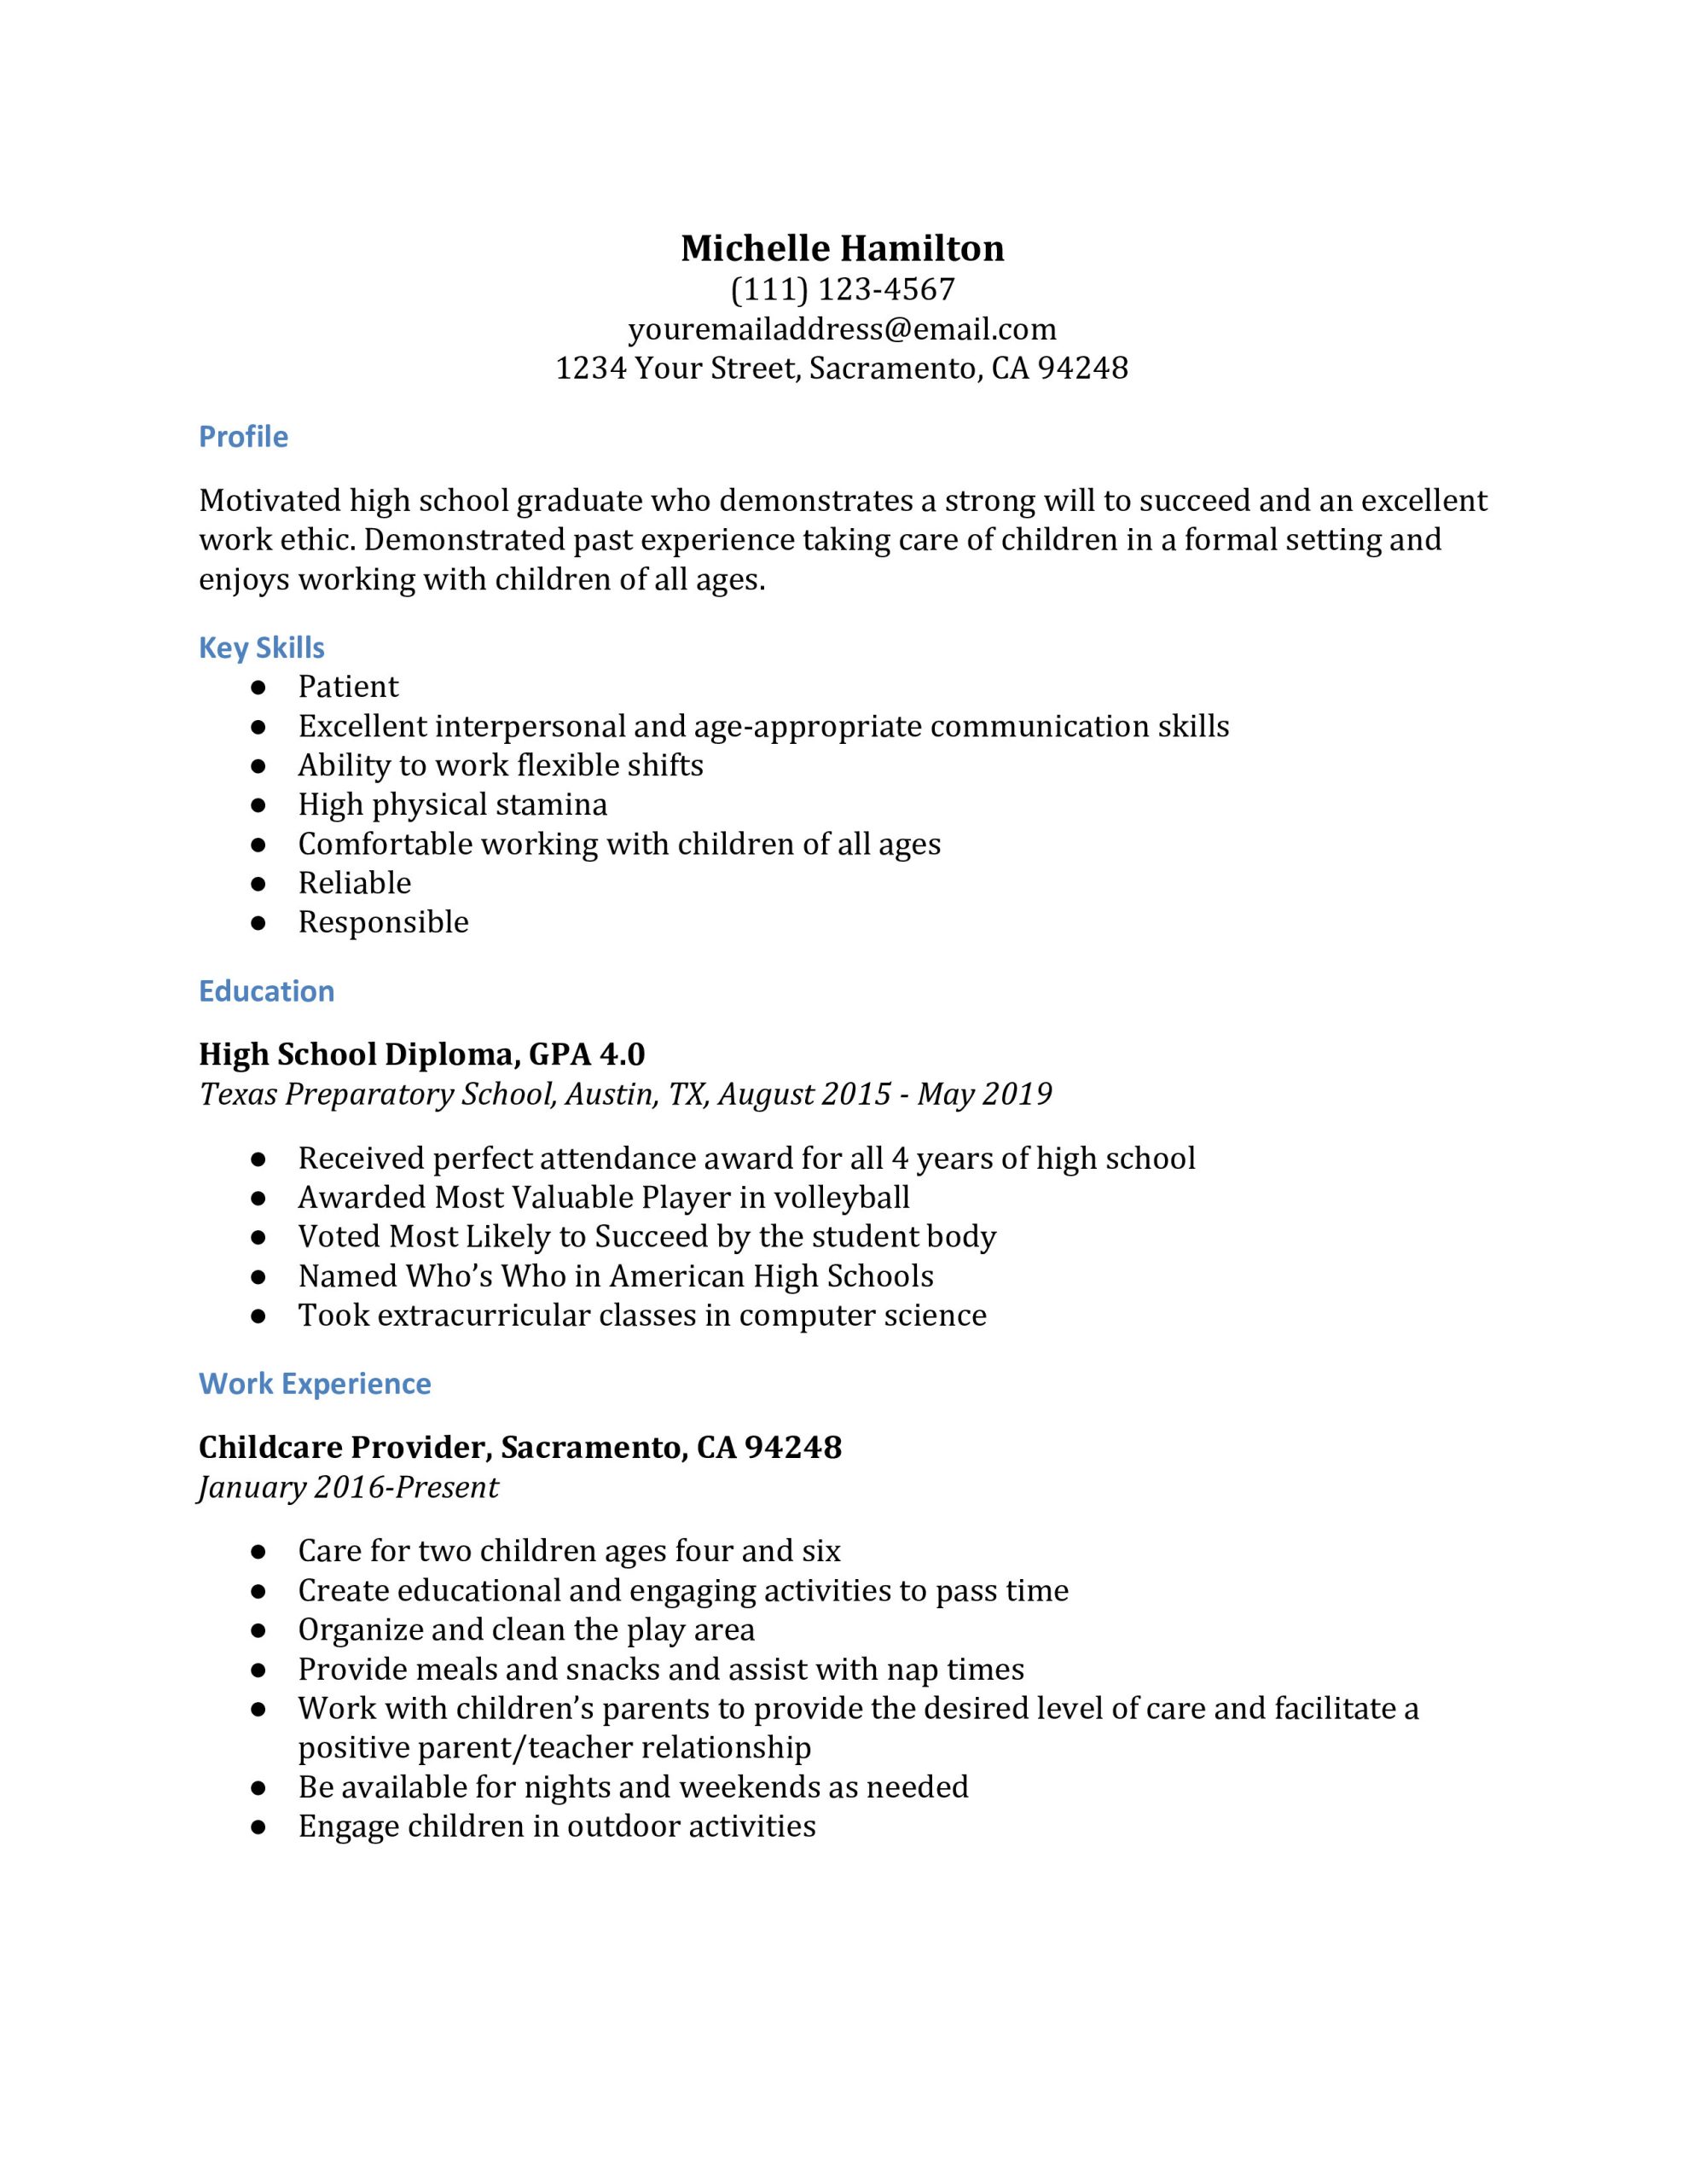 Sample Resume for High School Student Summer Job High School Resume Examples – Resumebuilder.com